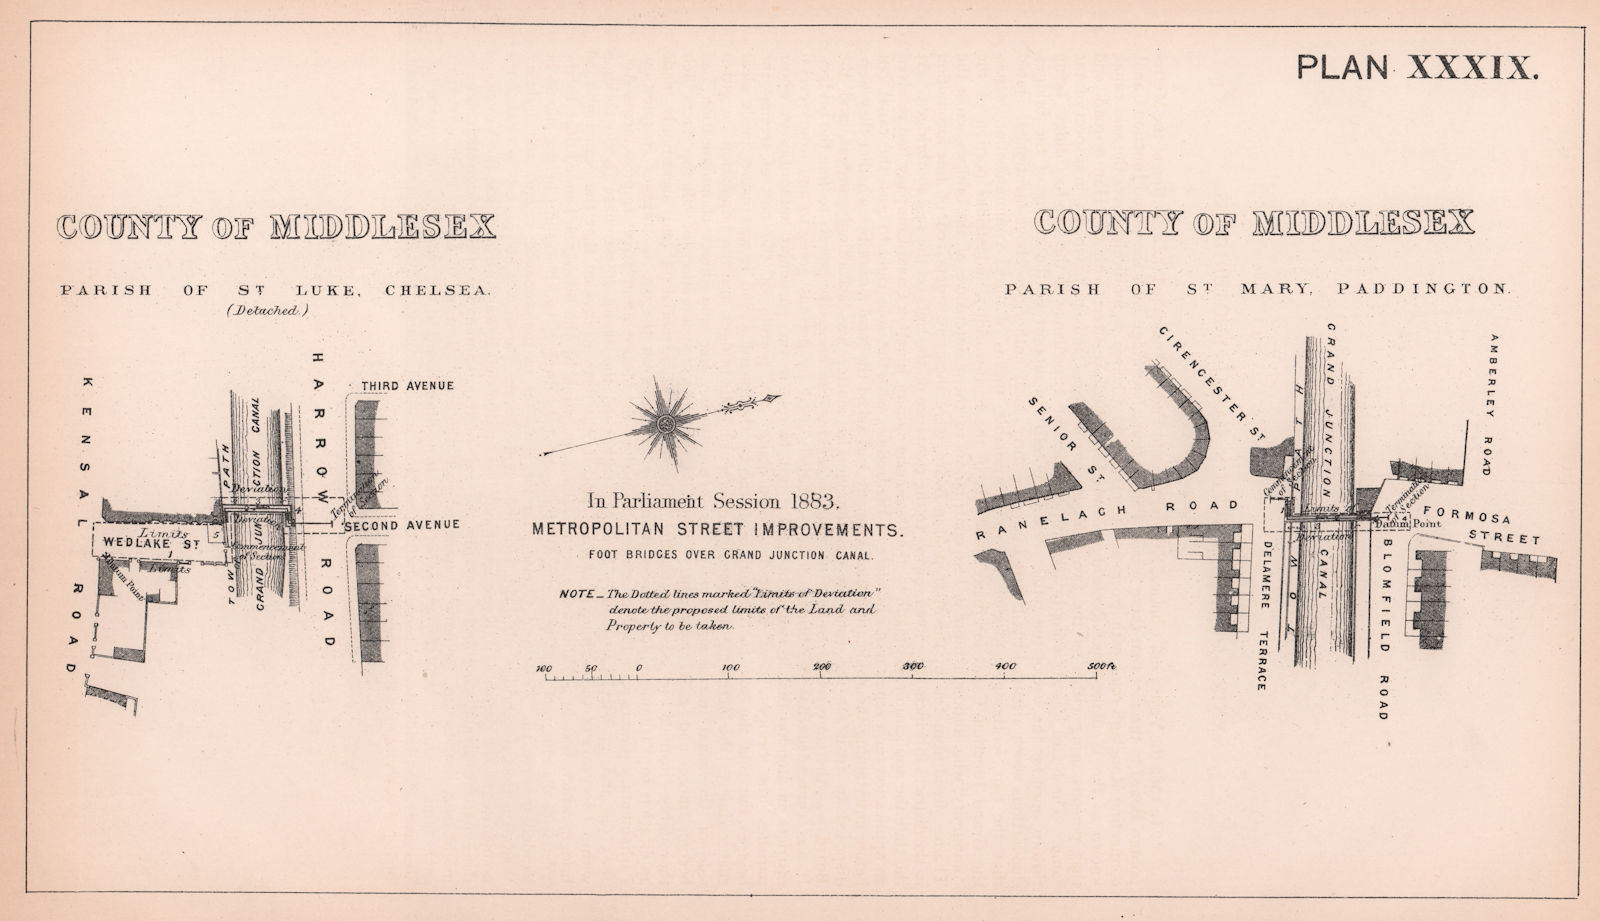 1883 Grand Junction/Union Canal footbridges. Maida Vale & Kensal Town 1898 map